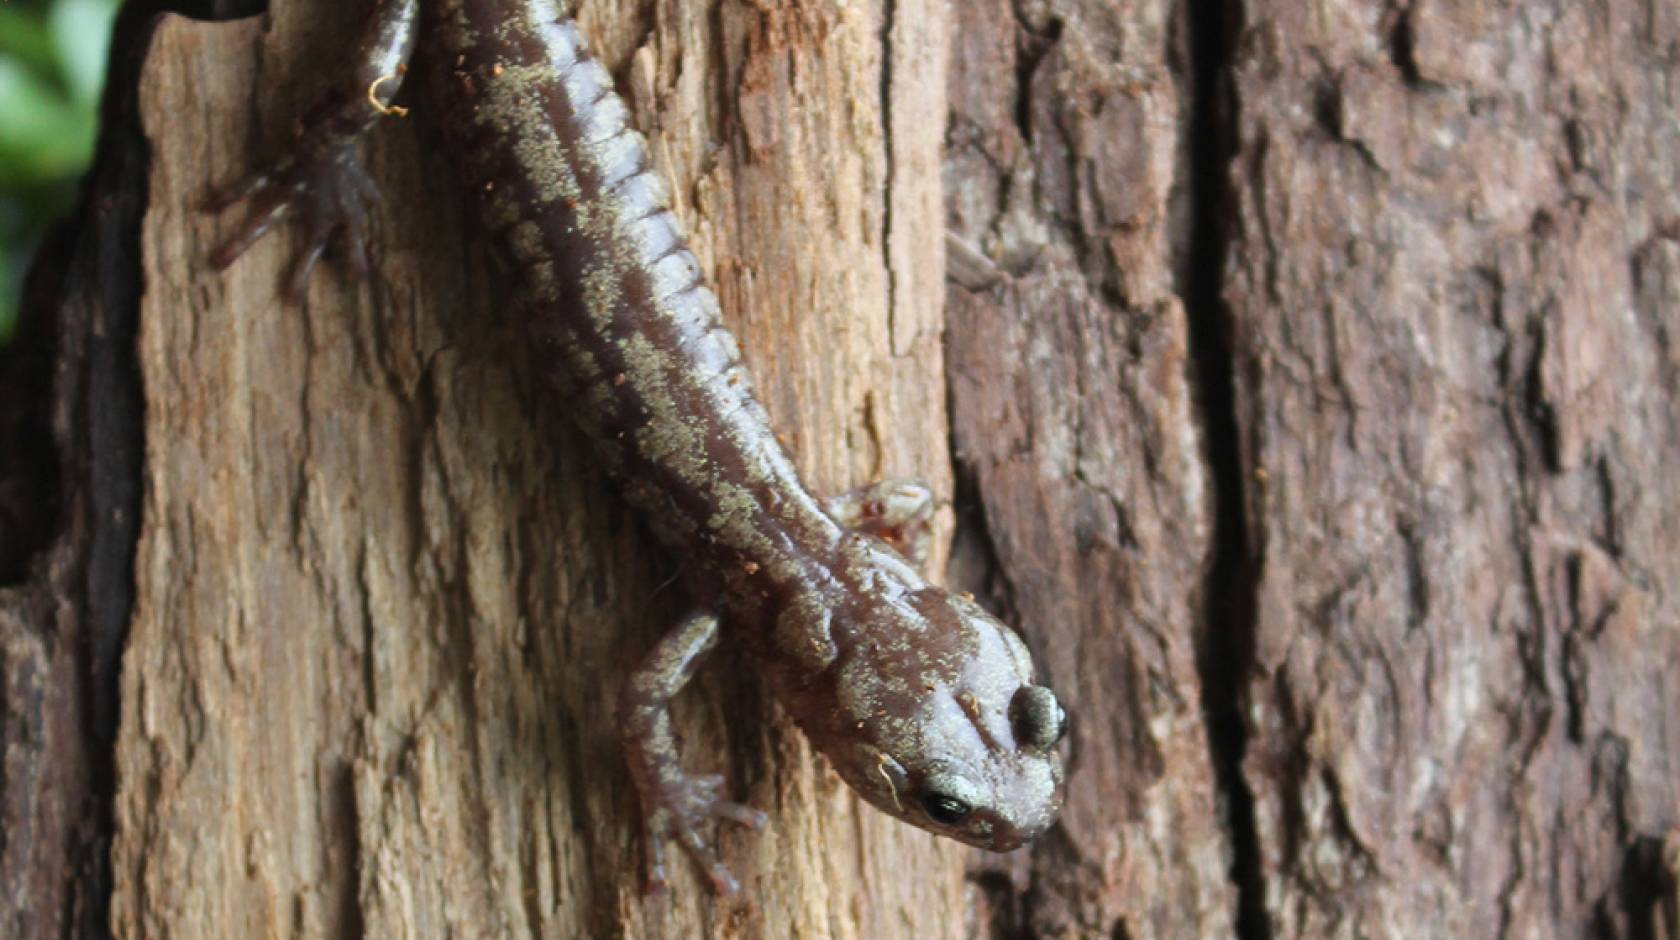 A wandering salamander on a tree